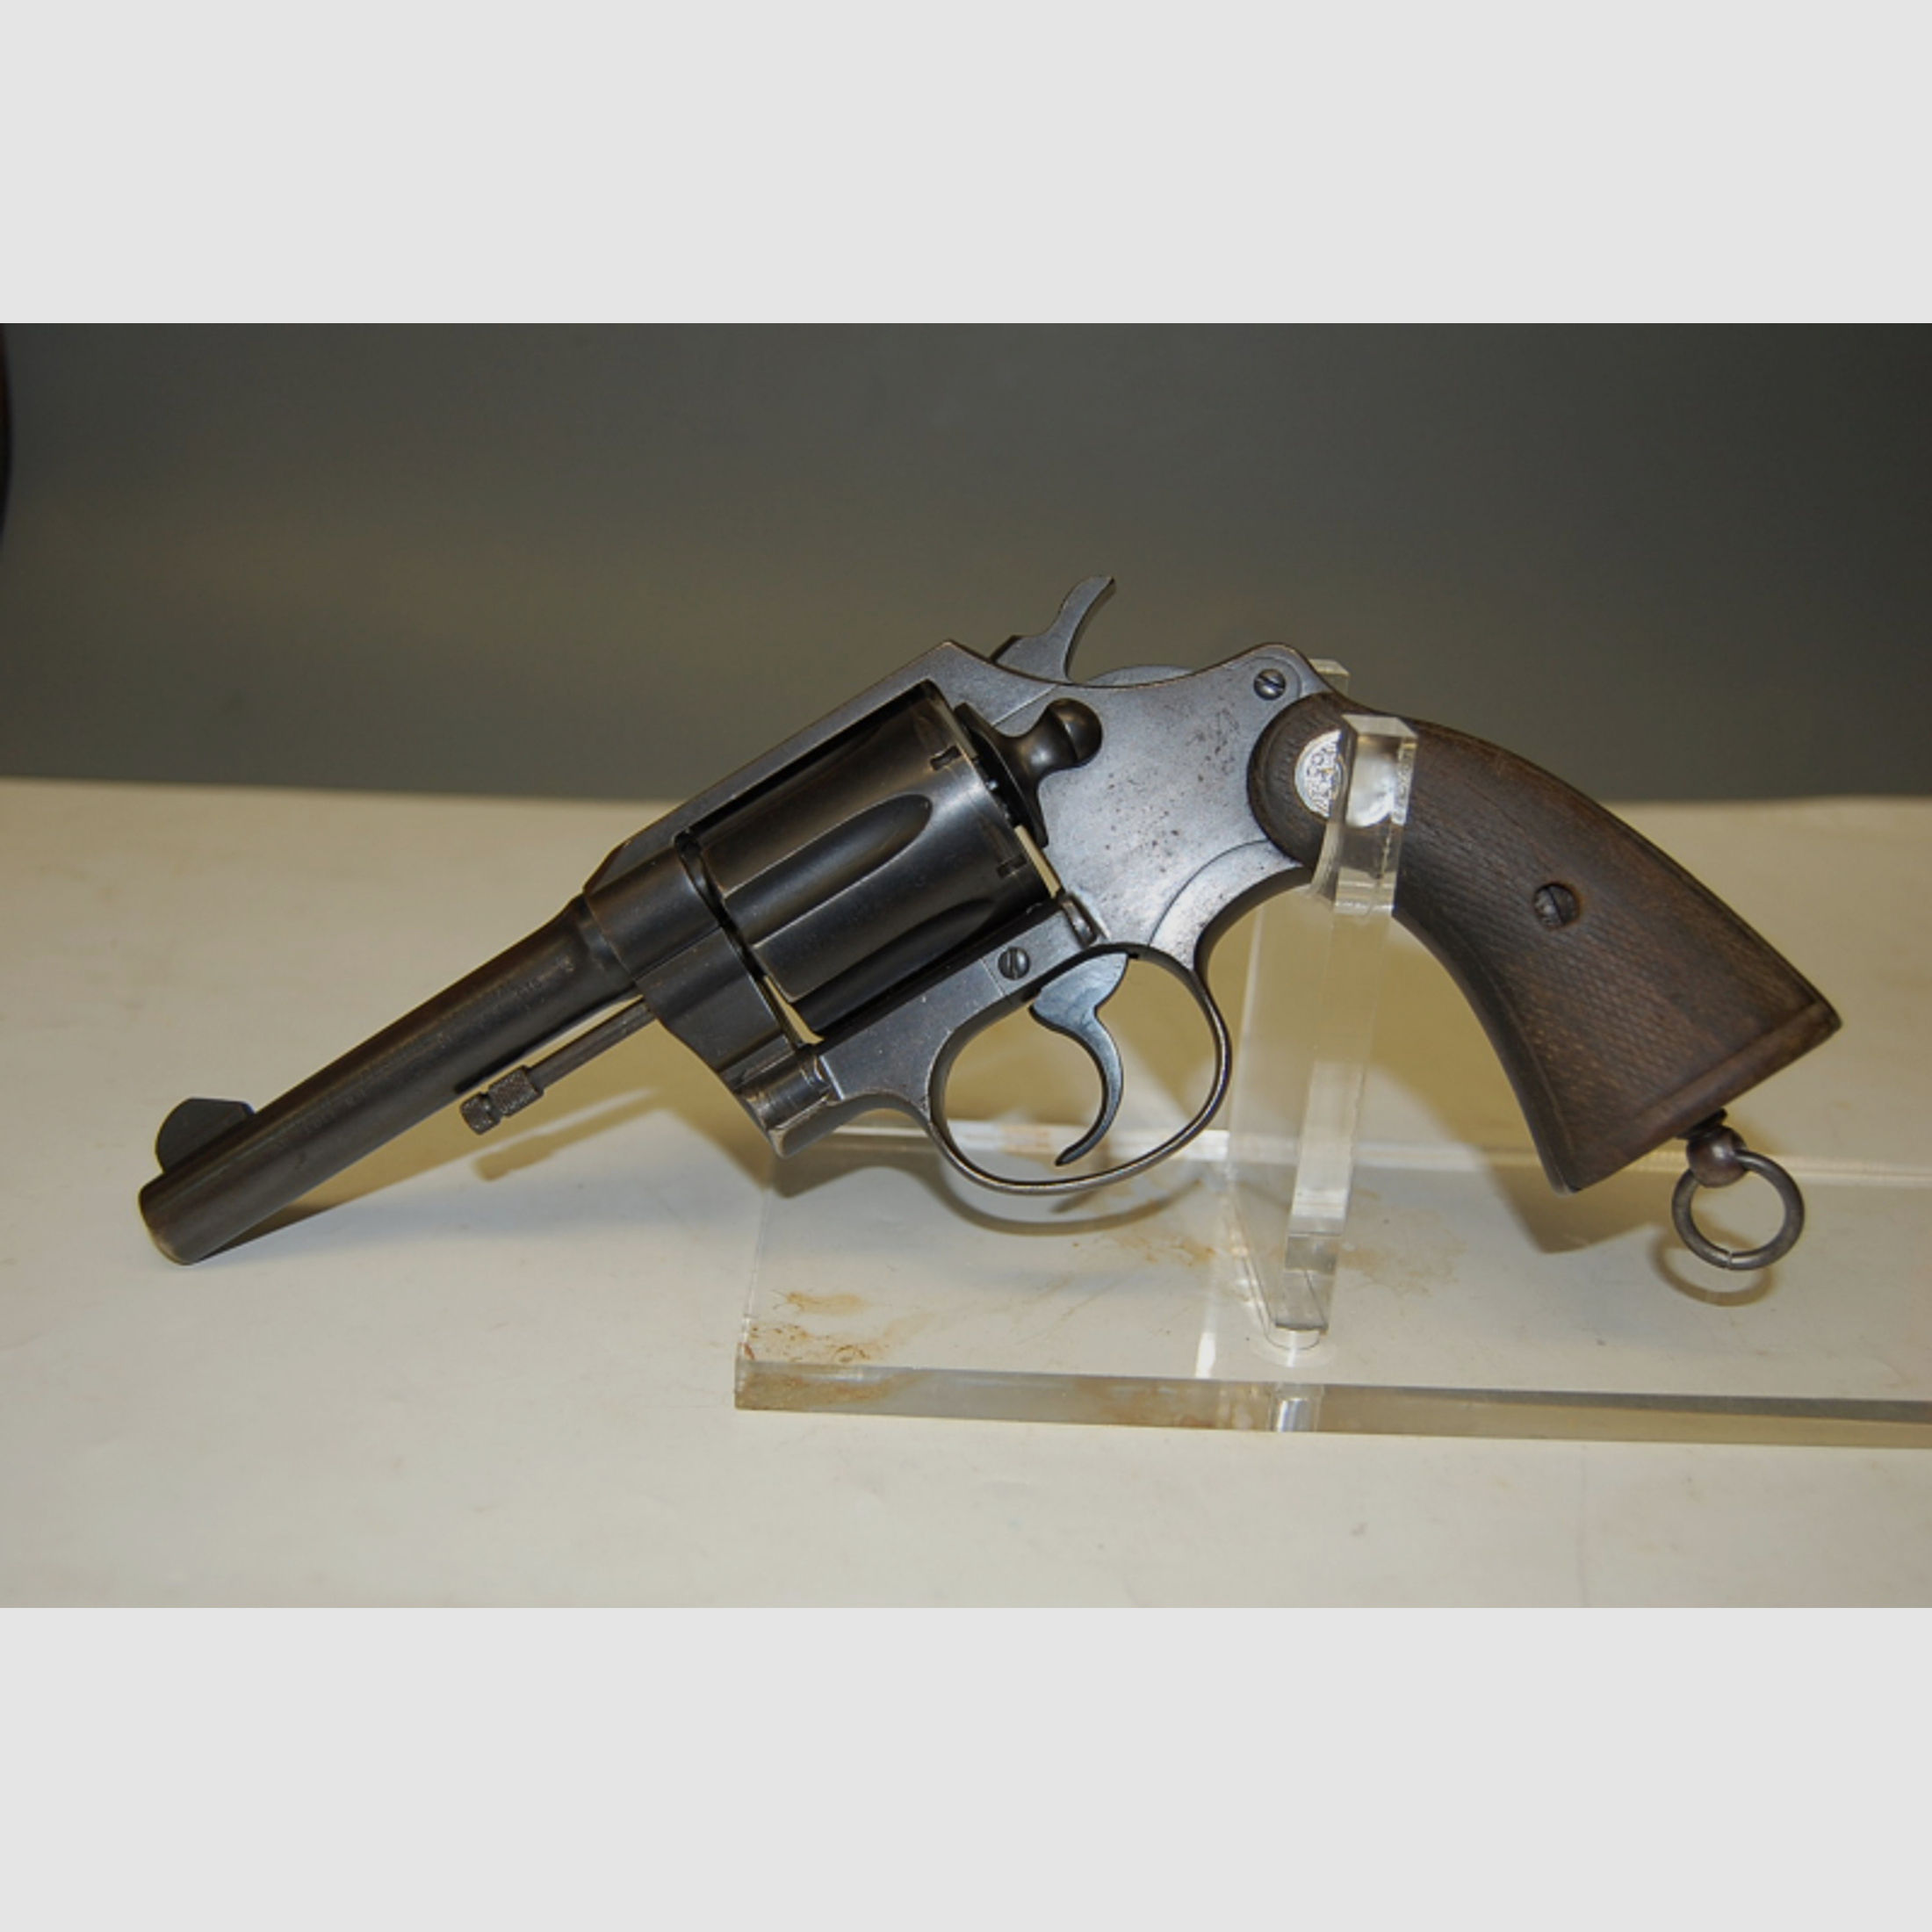 Vom Sammler Original Colt Revolver Positive Spezial Kal .38S&W mit 4" Lauf